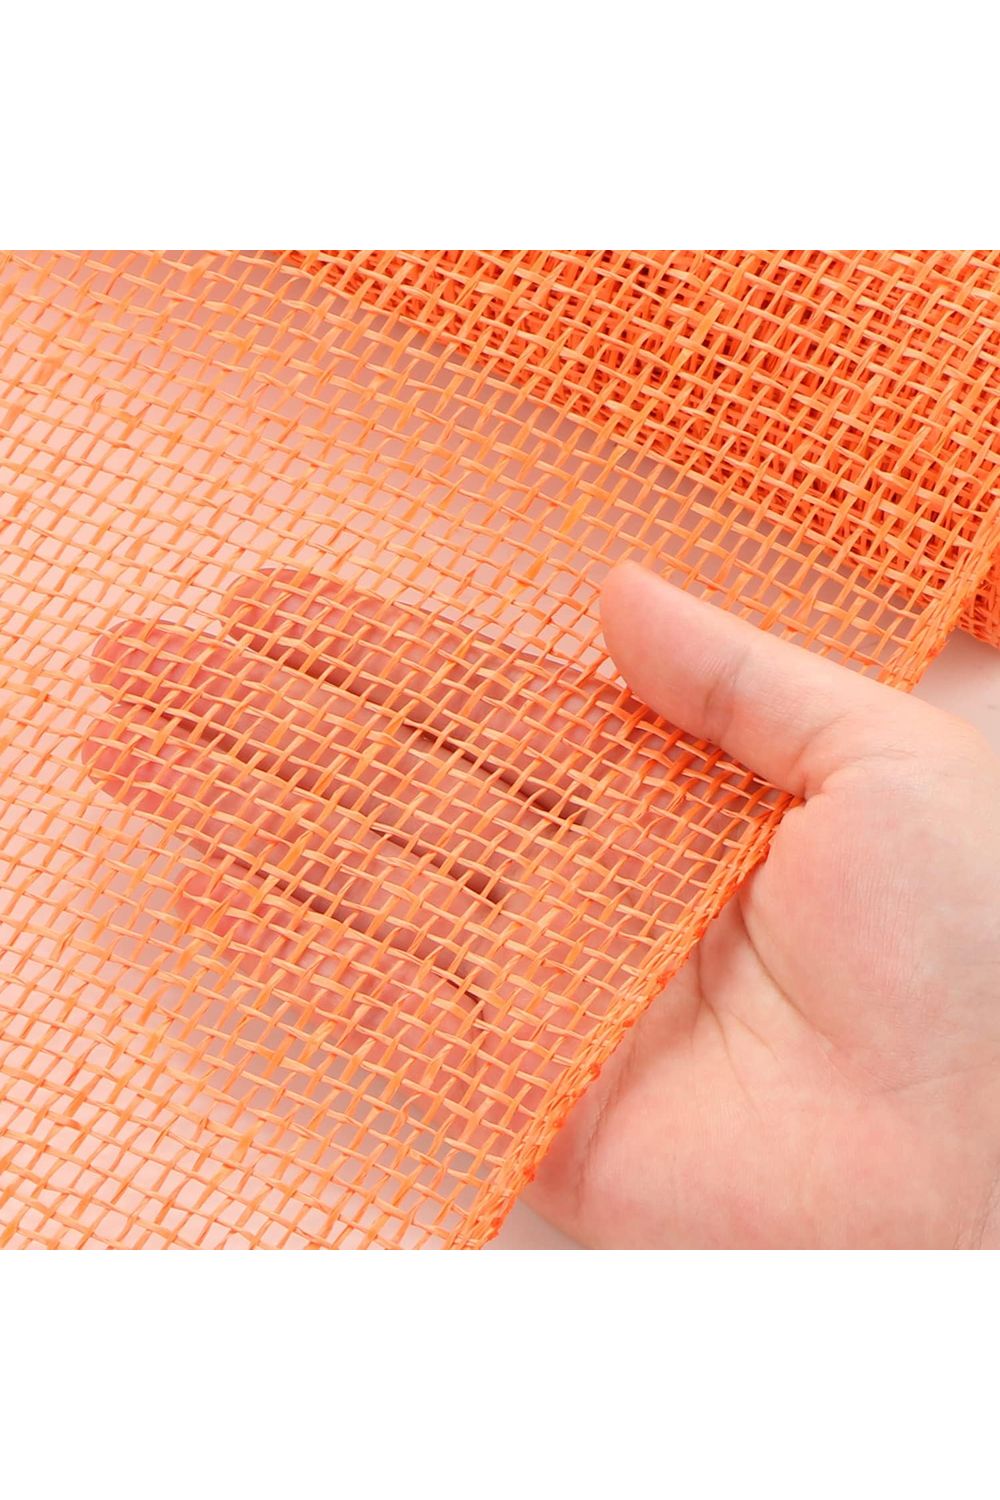 10" Poly Burlap Mesh: Orange - Michelle's aDOORable Creations - Poly Deco Mesh